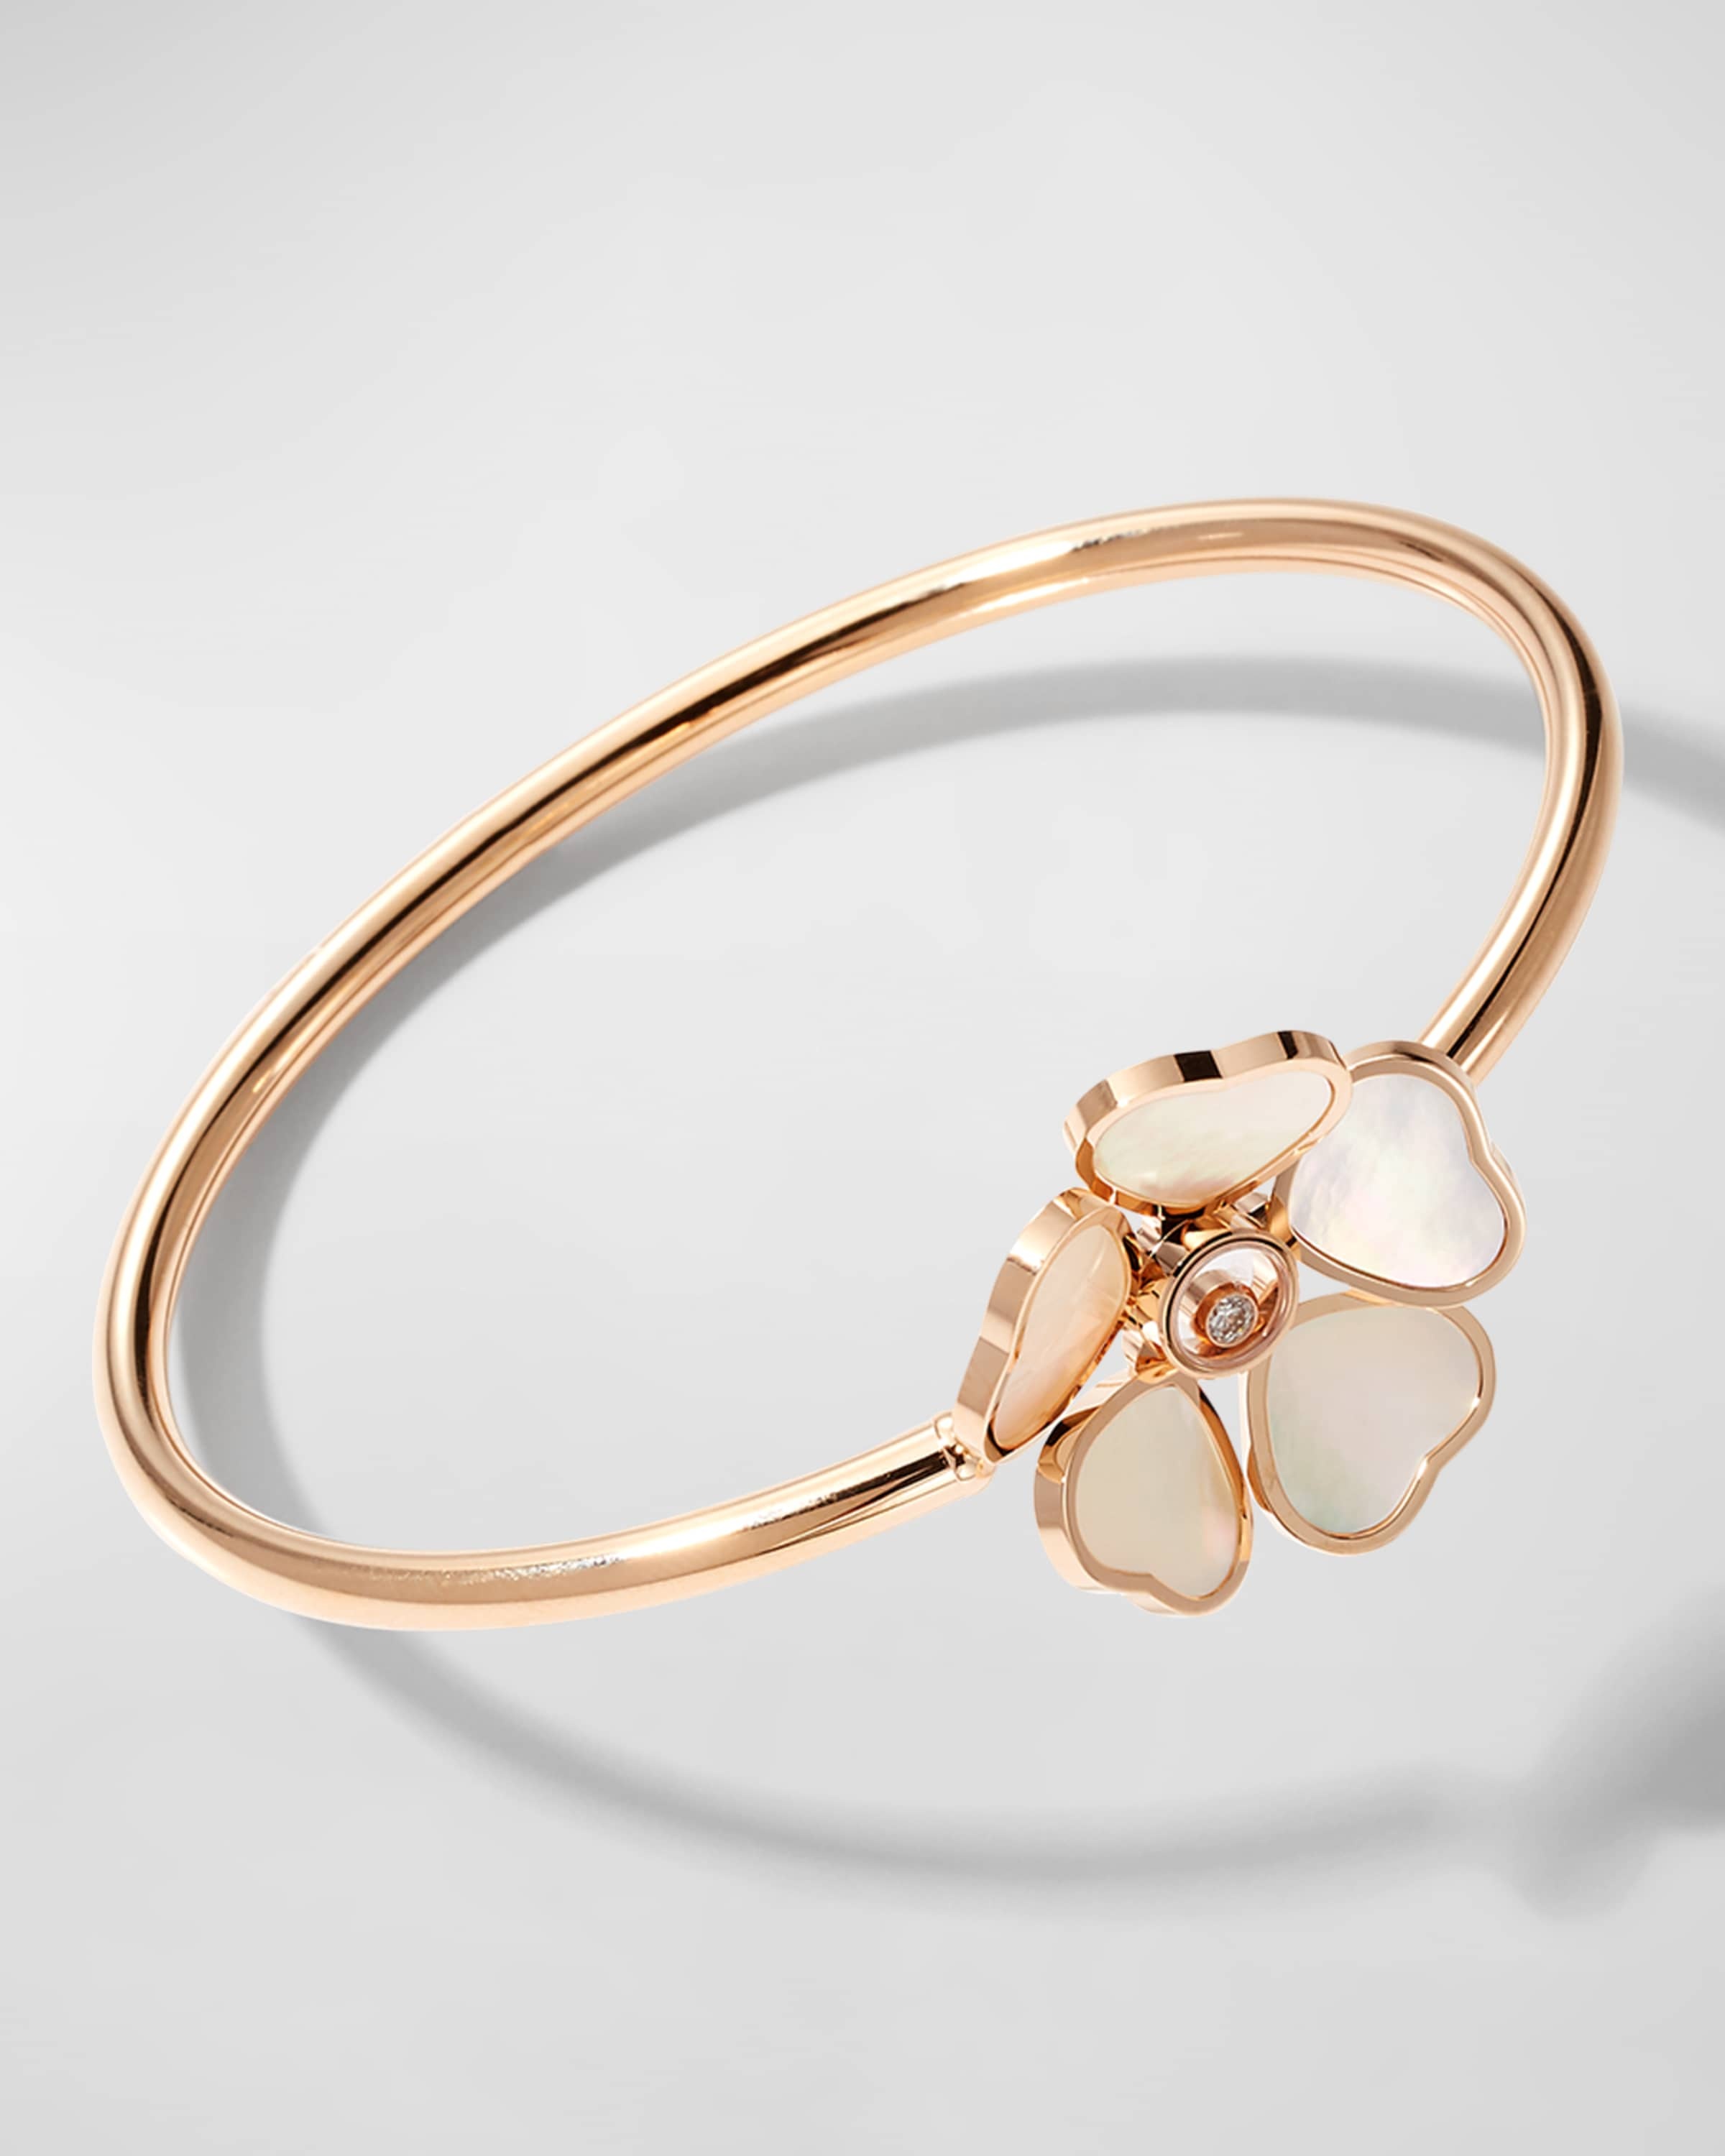 Happy Hearts 18K Rose Gold Mother-of-Pearl & Diamond Bracelet, Size Medium - 4